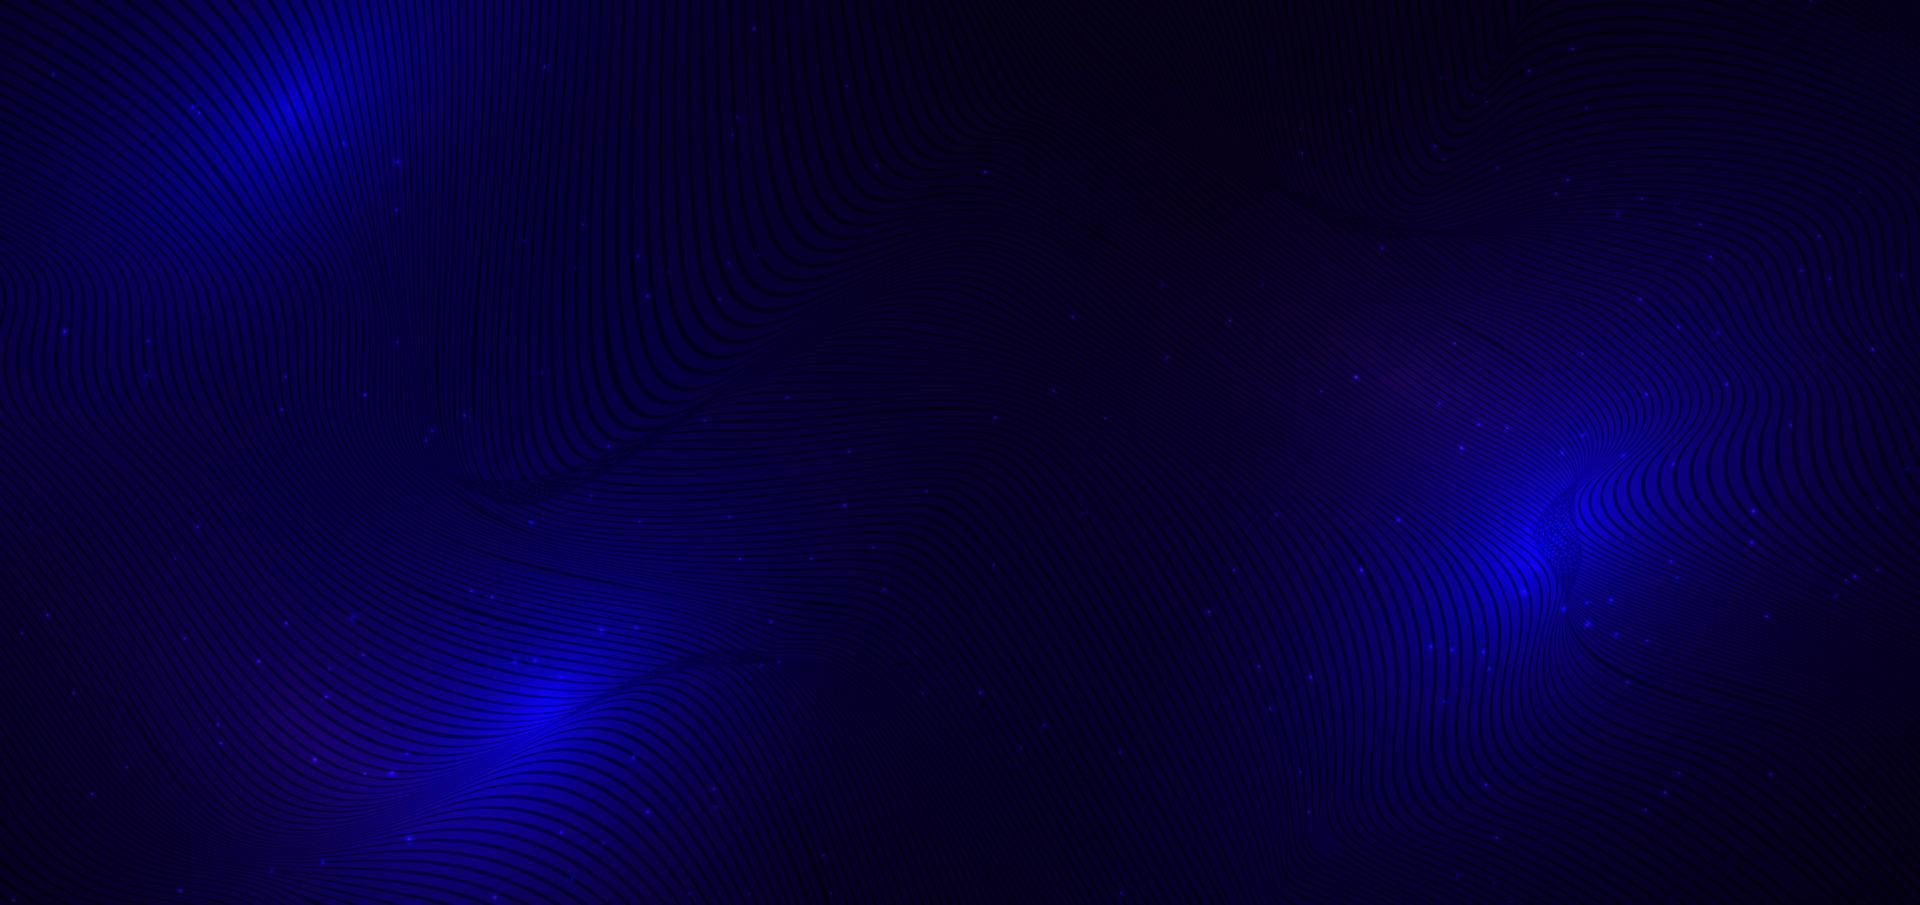 abstract technologie futuristische gloeiend blauw licht lijnen golvend met snelheid beweging vervagen effect Aan donker blauw achtergrond. vector